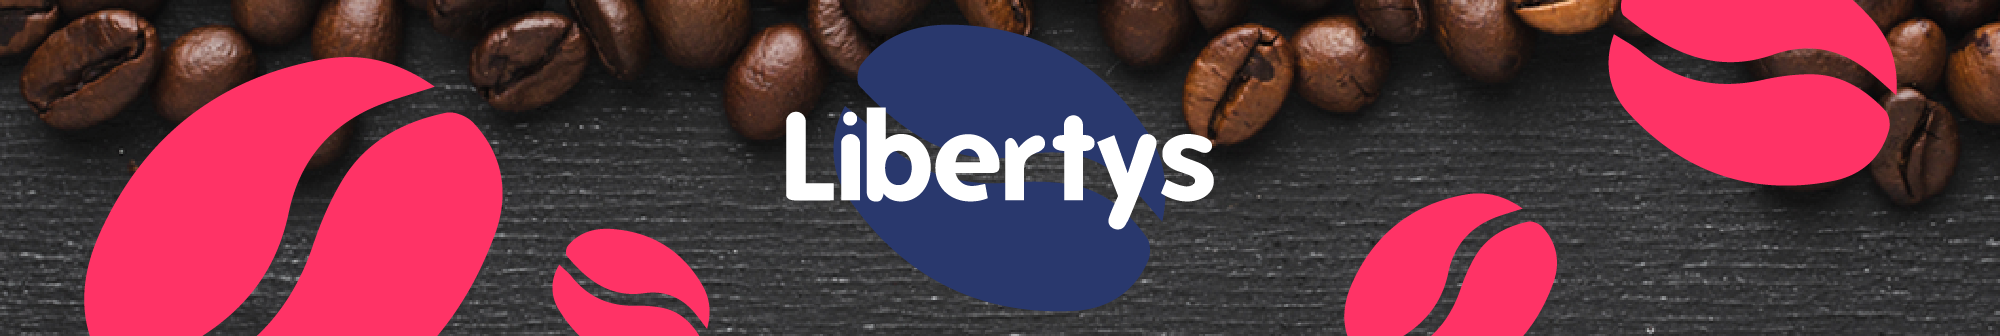 Libertys logo header image